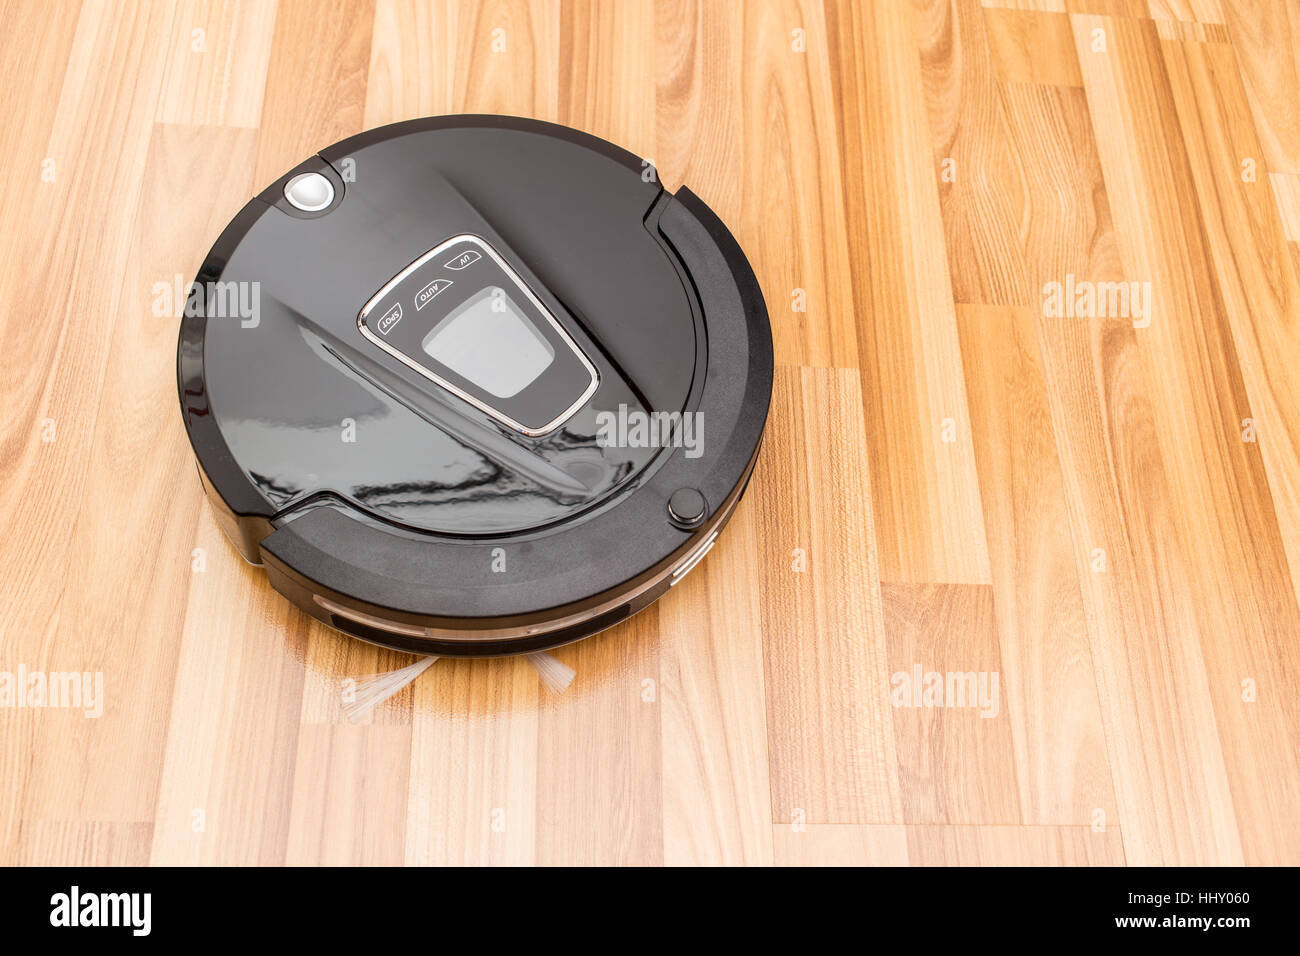 Robotic vacuum cleaner on wood parquet floor, Smart vacuum, new automate technology housework. Stock Photo